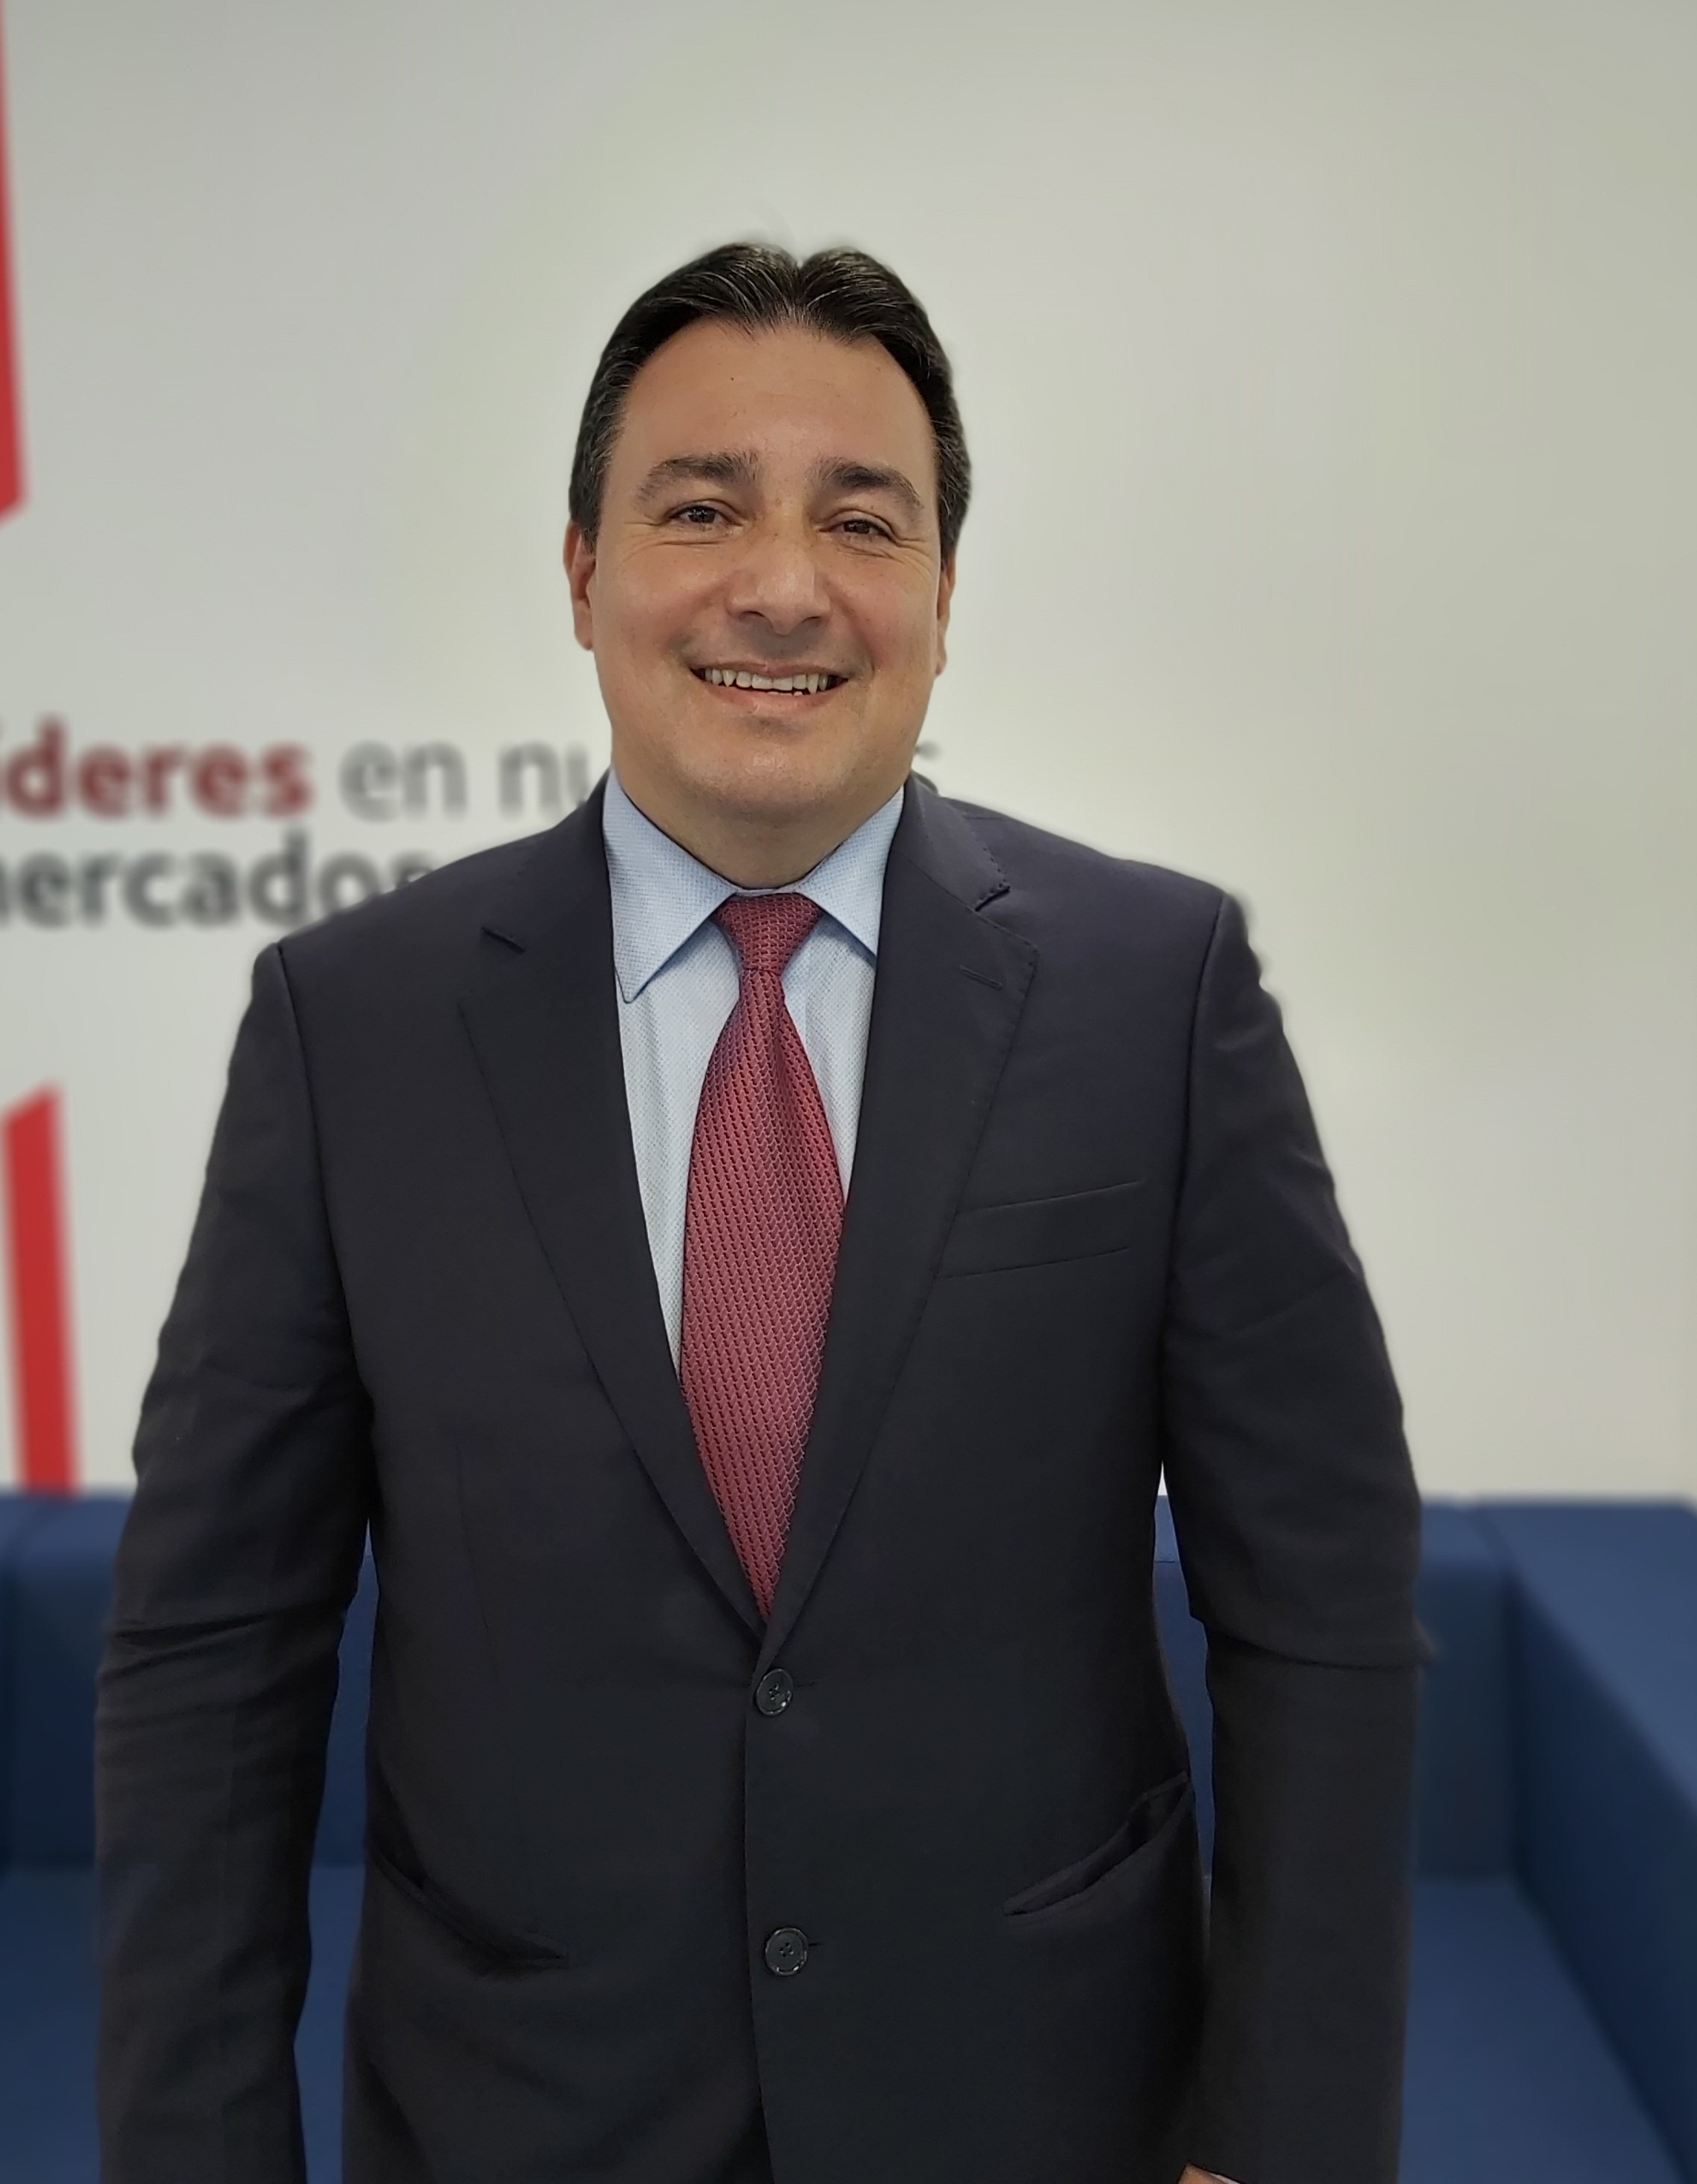 Rubén Darío Cortés Sánchez